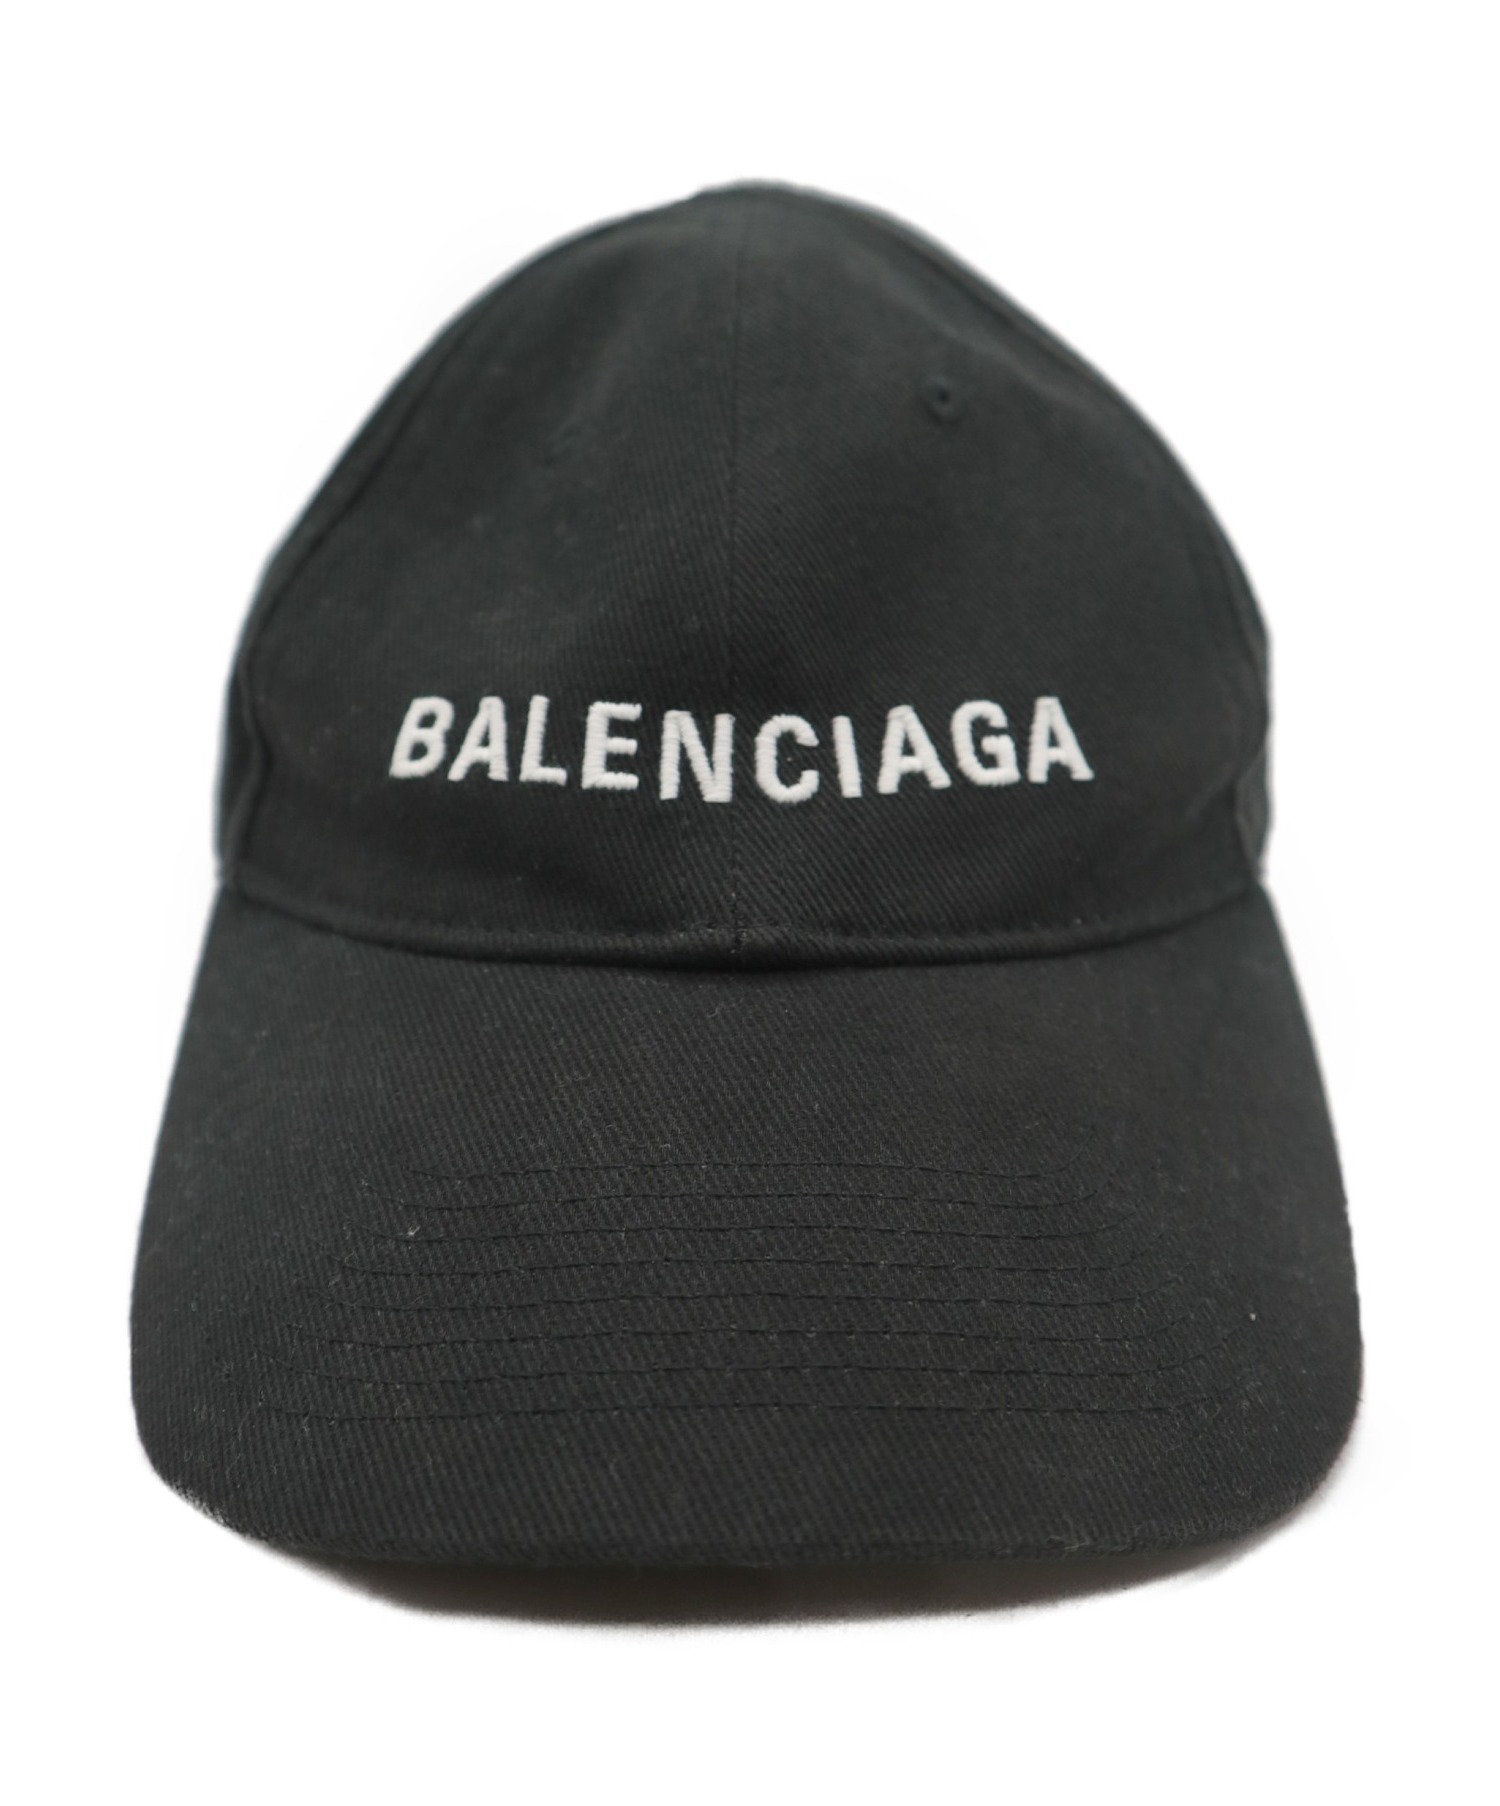 BALENCIAGA バレンシアガ キャップ - 黒